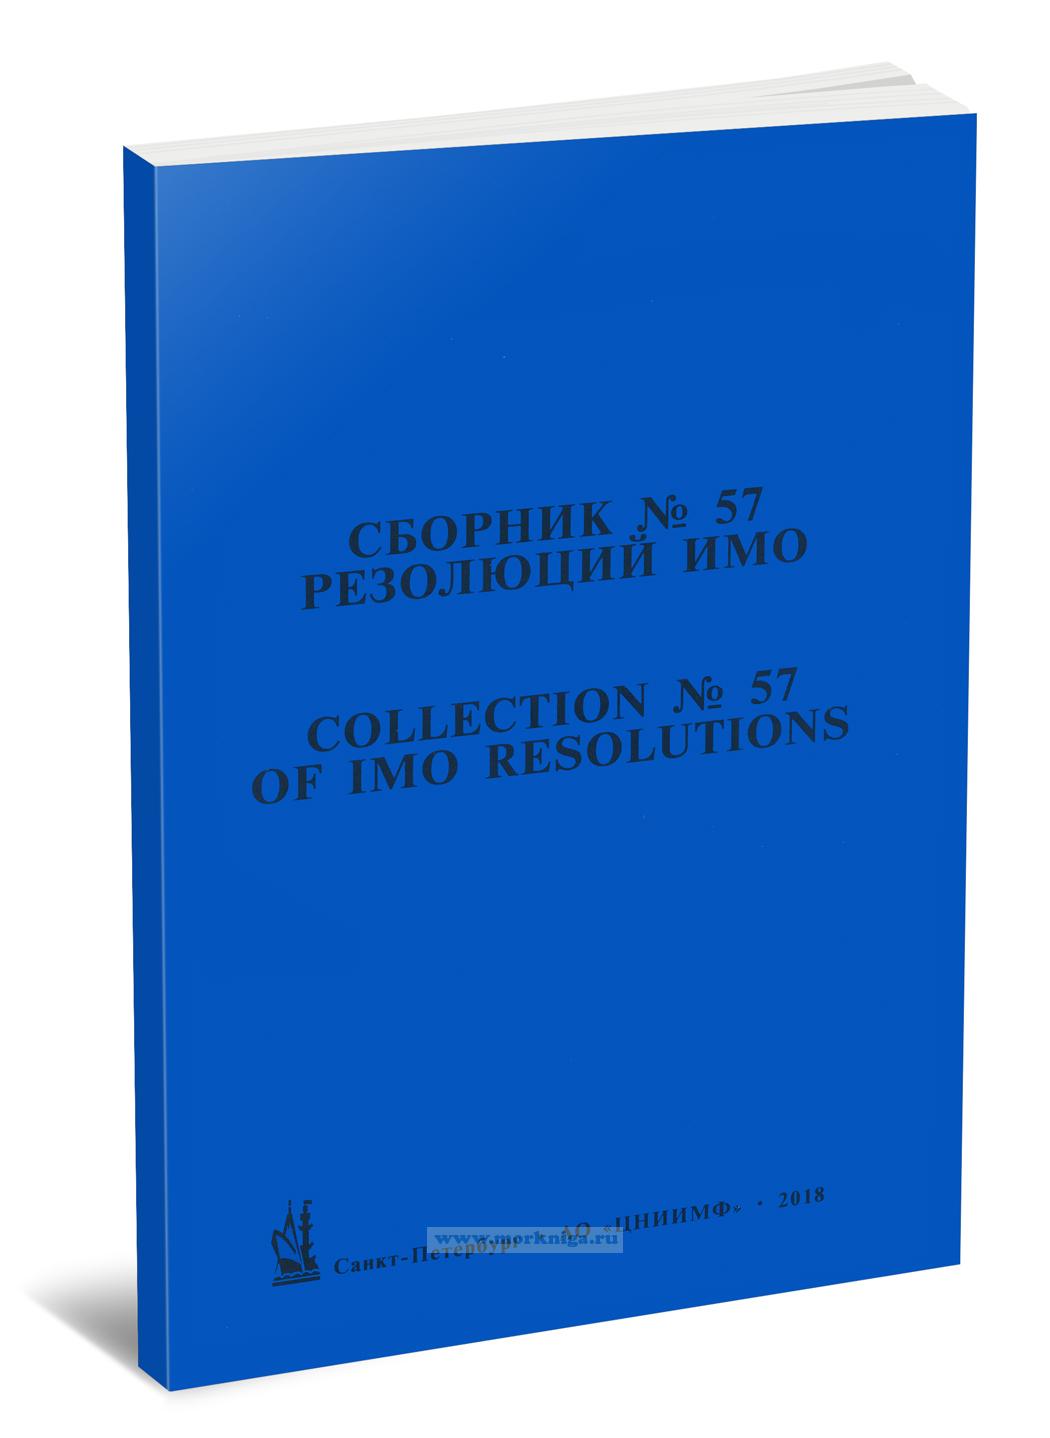 Сборник № 57 резолюций ИМО/ Collection No.57 of IMO Resolutions